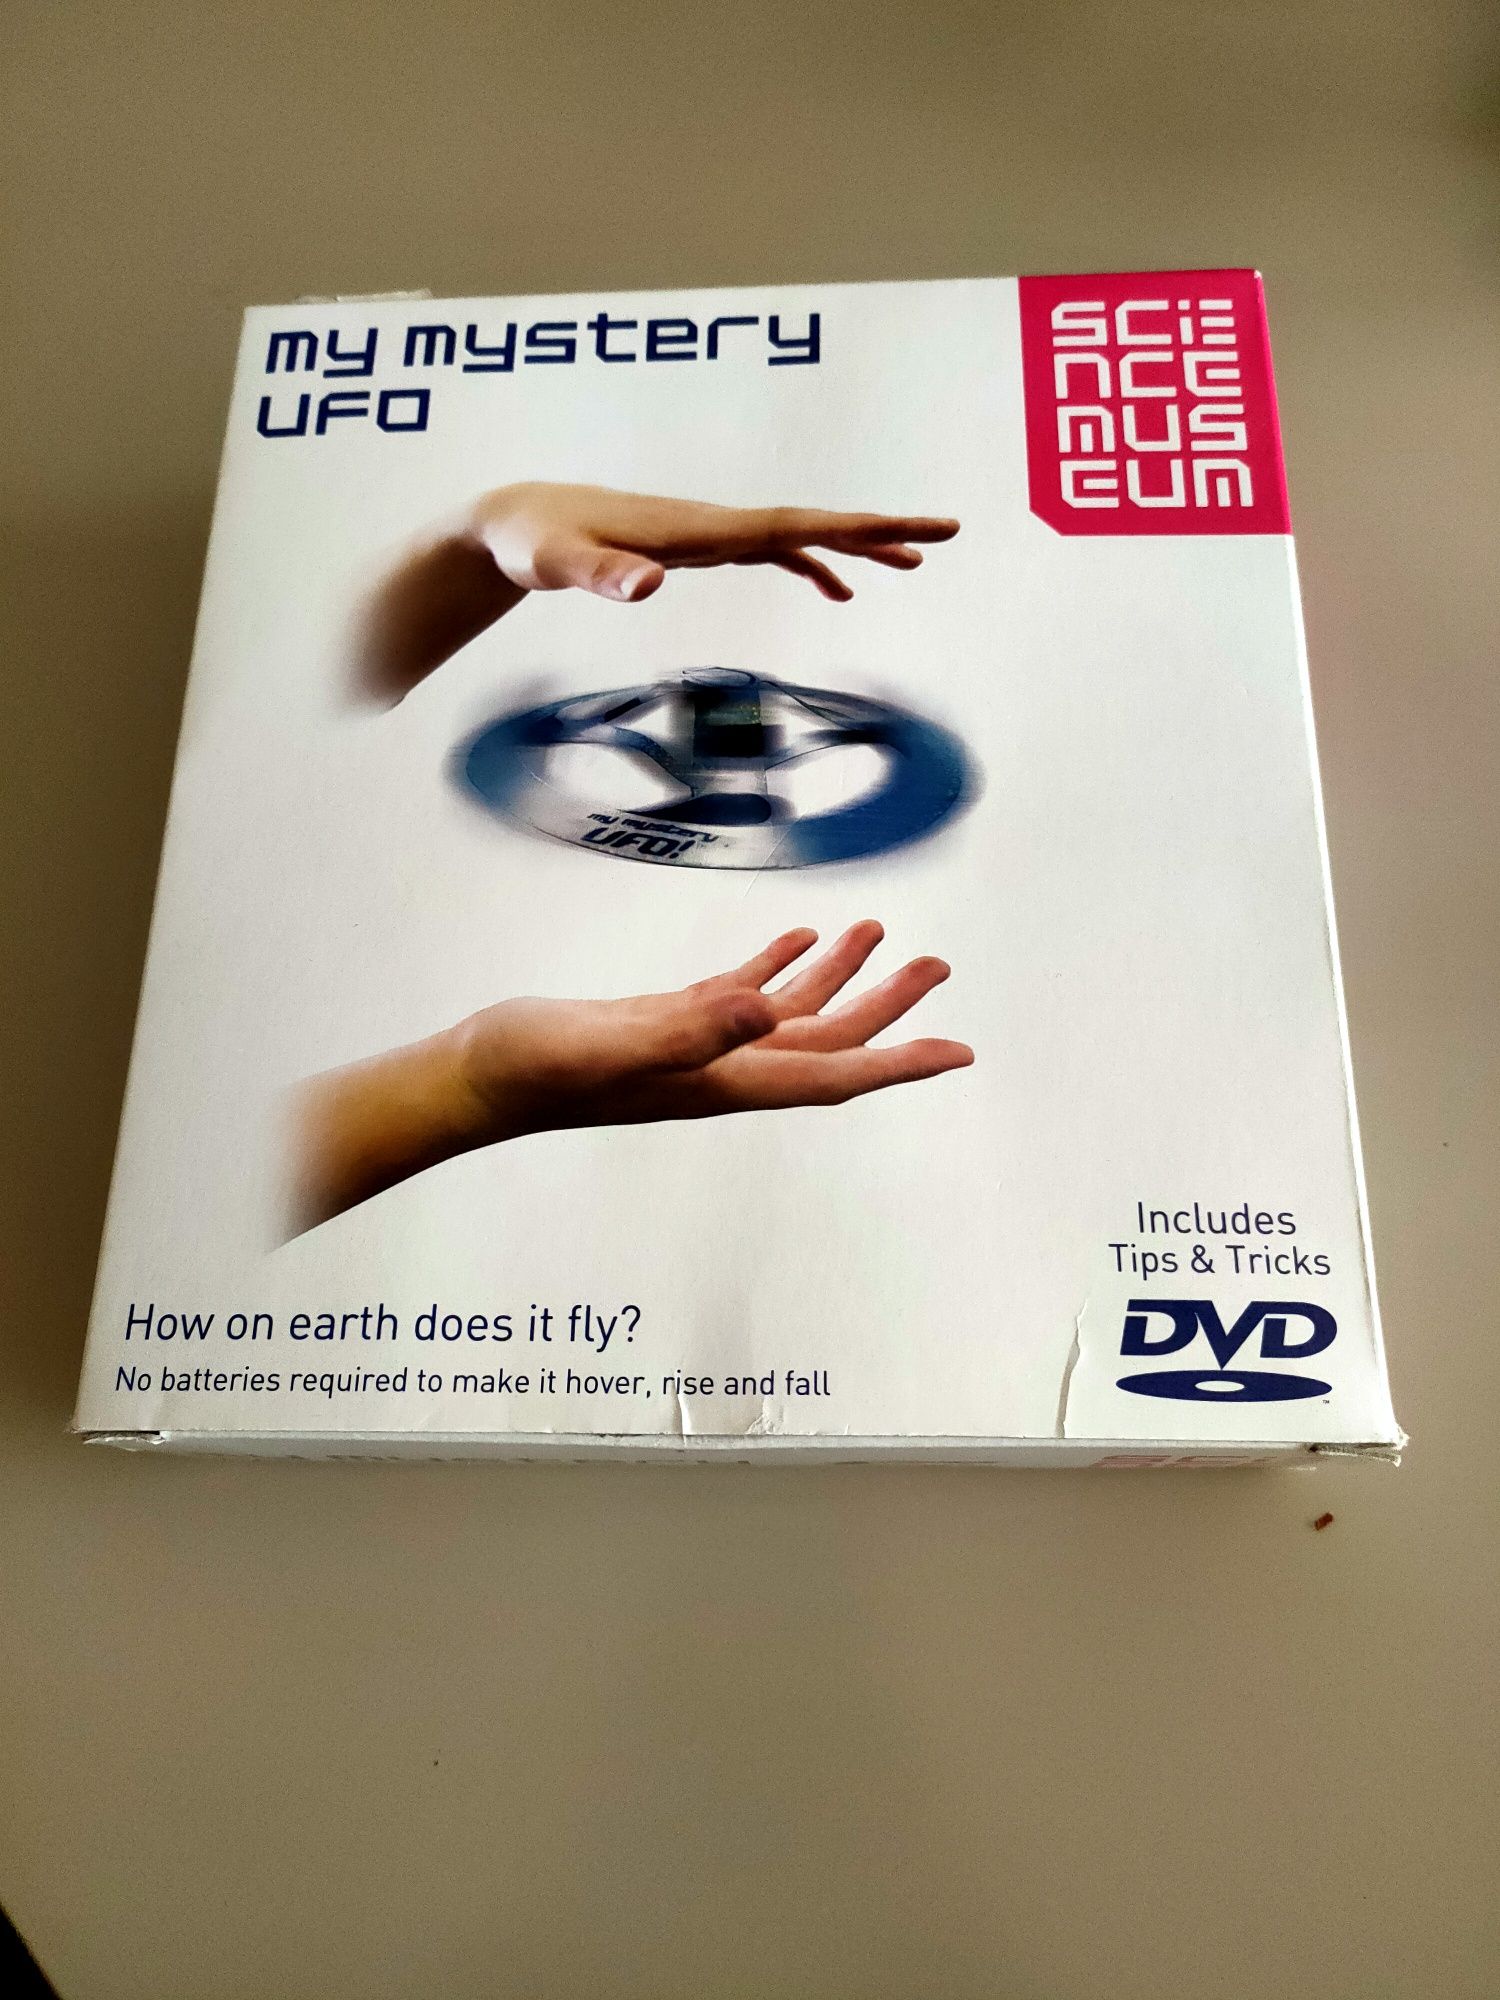 Brinquedo disco voador "My mystery Ufo"